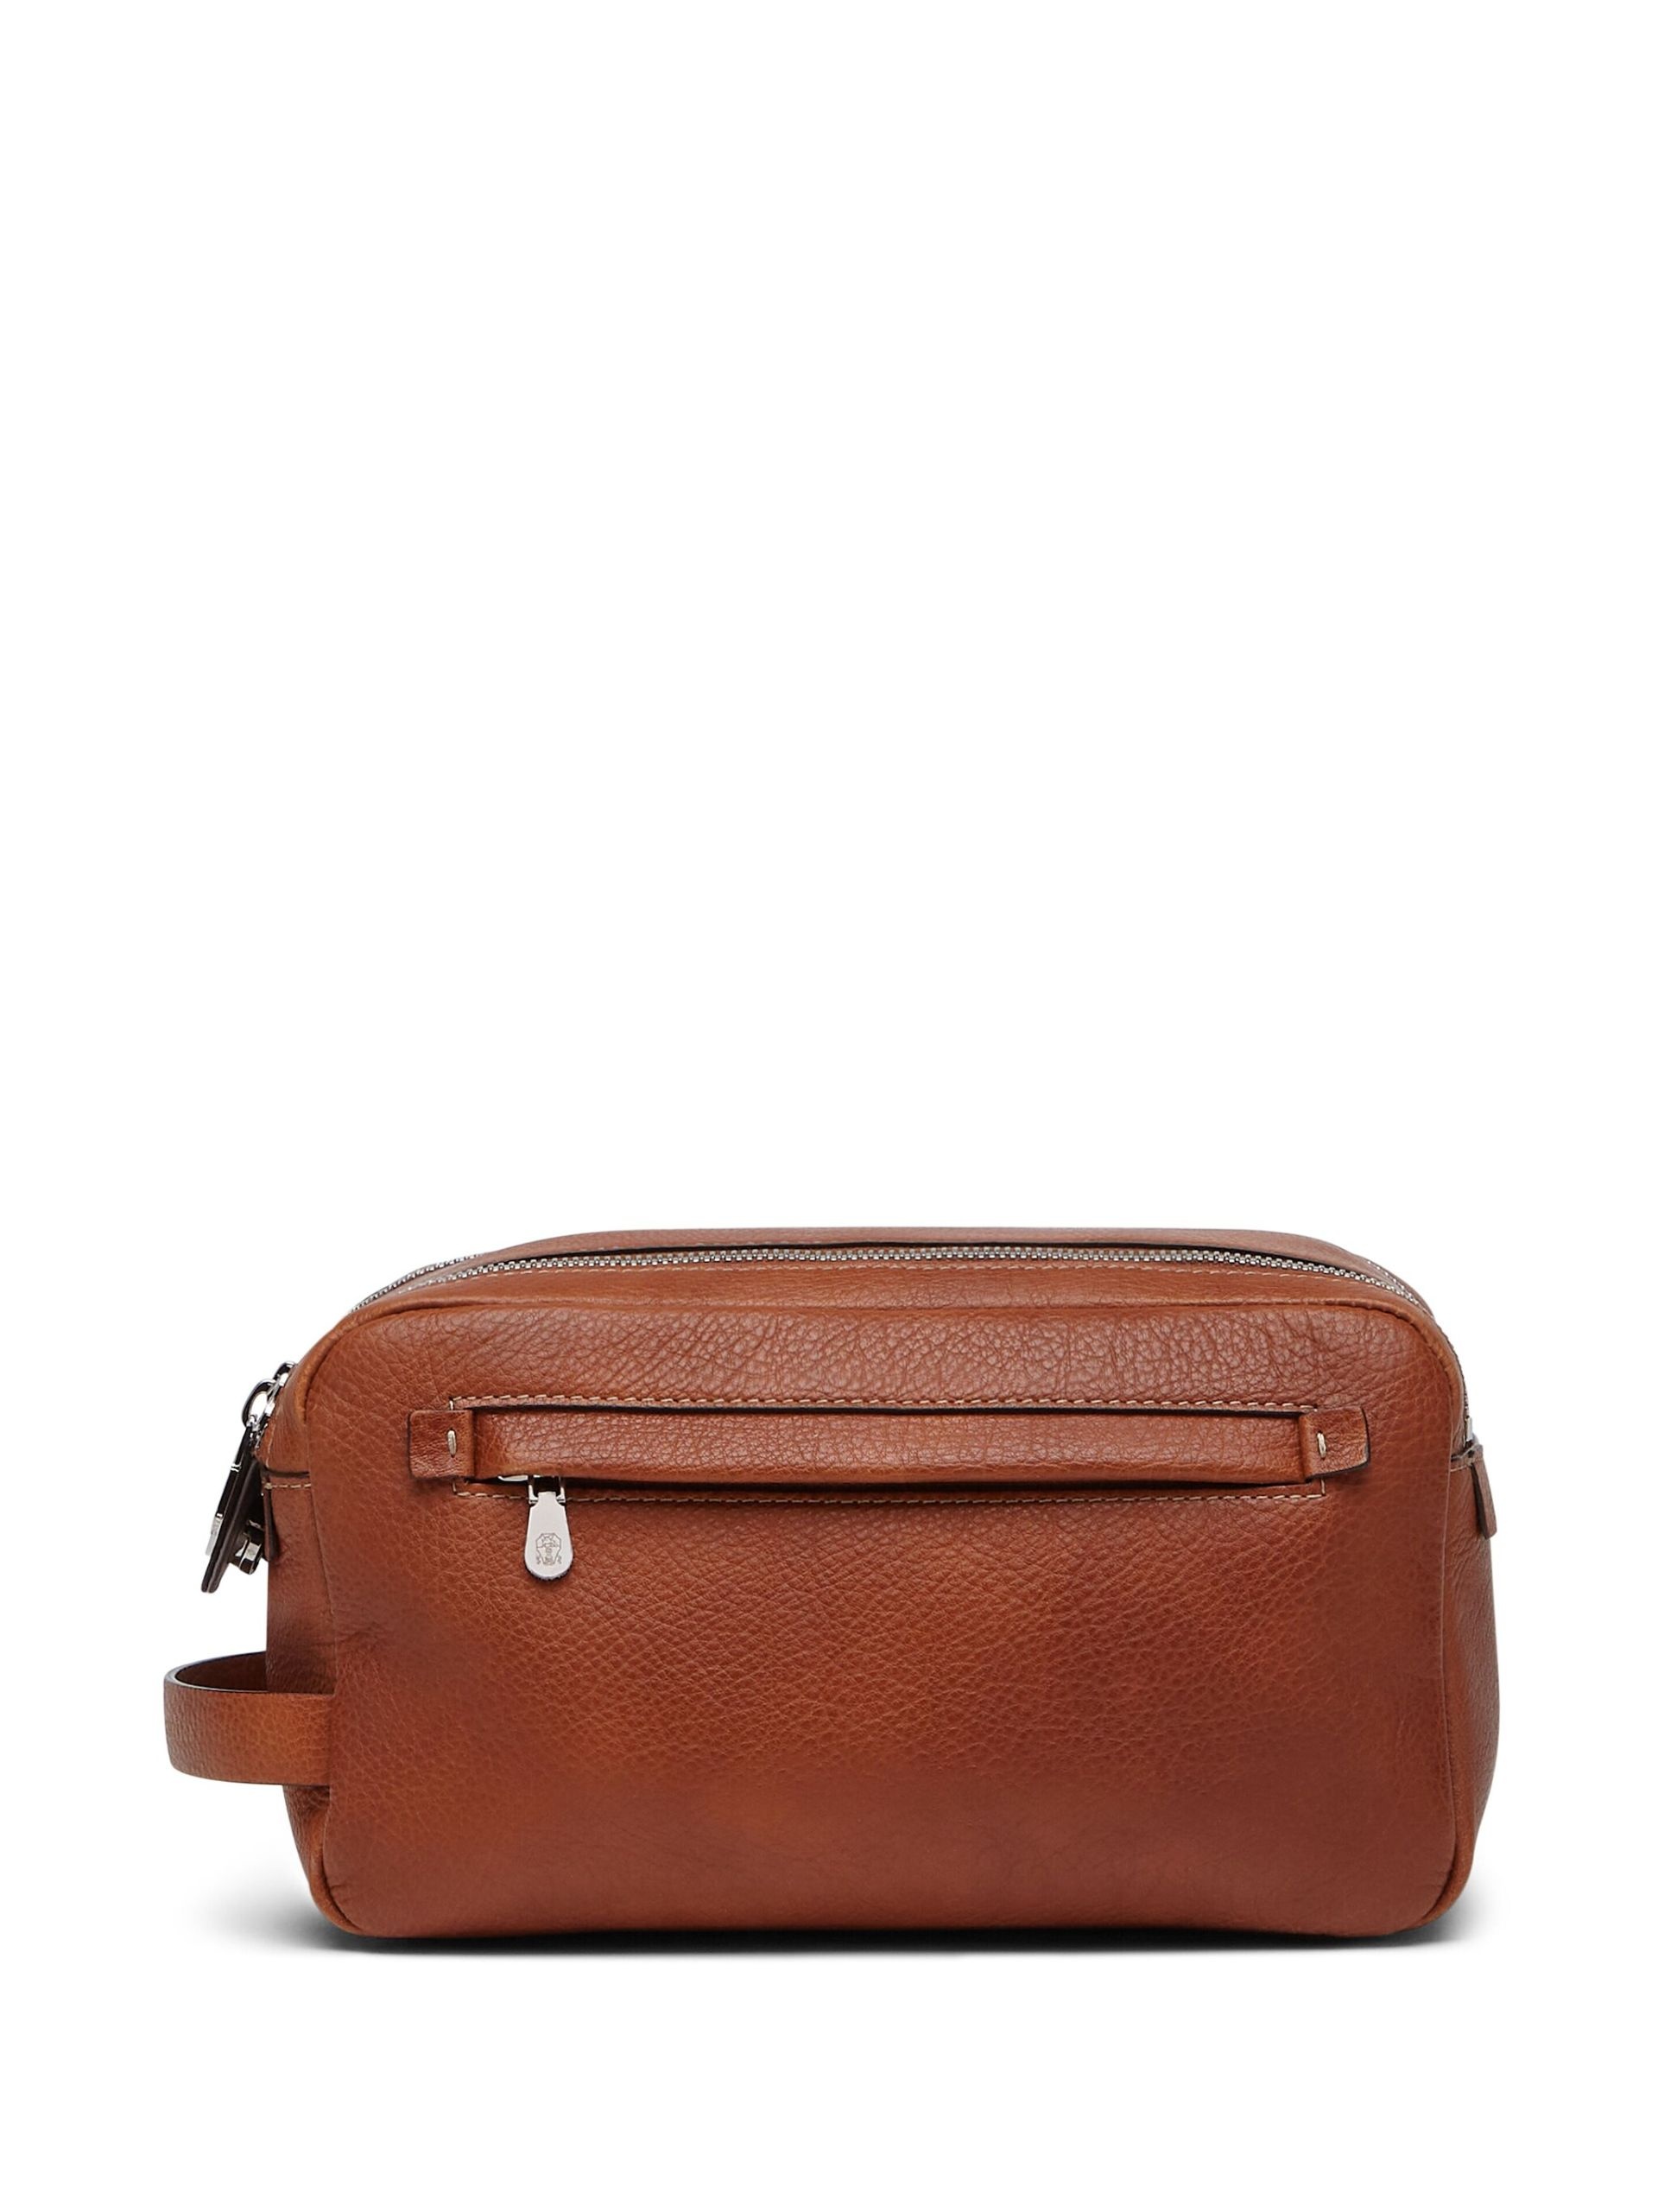 brown leather washbag - 1